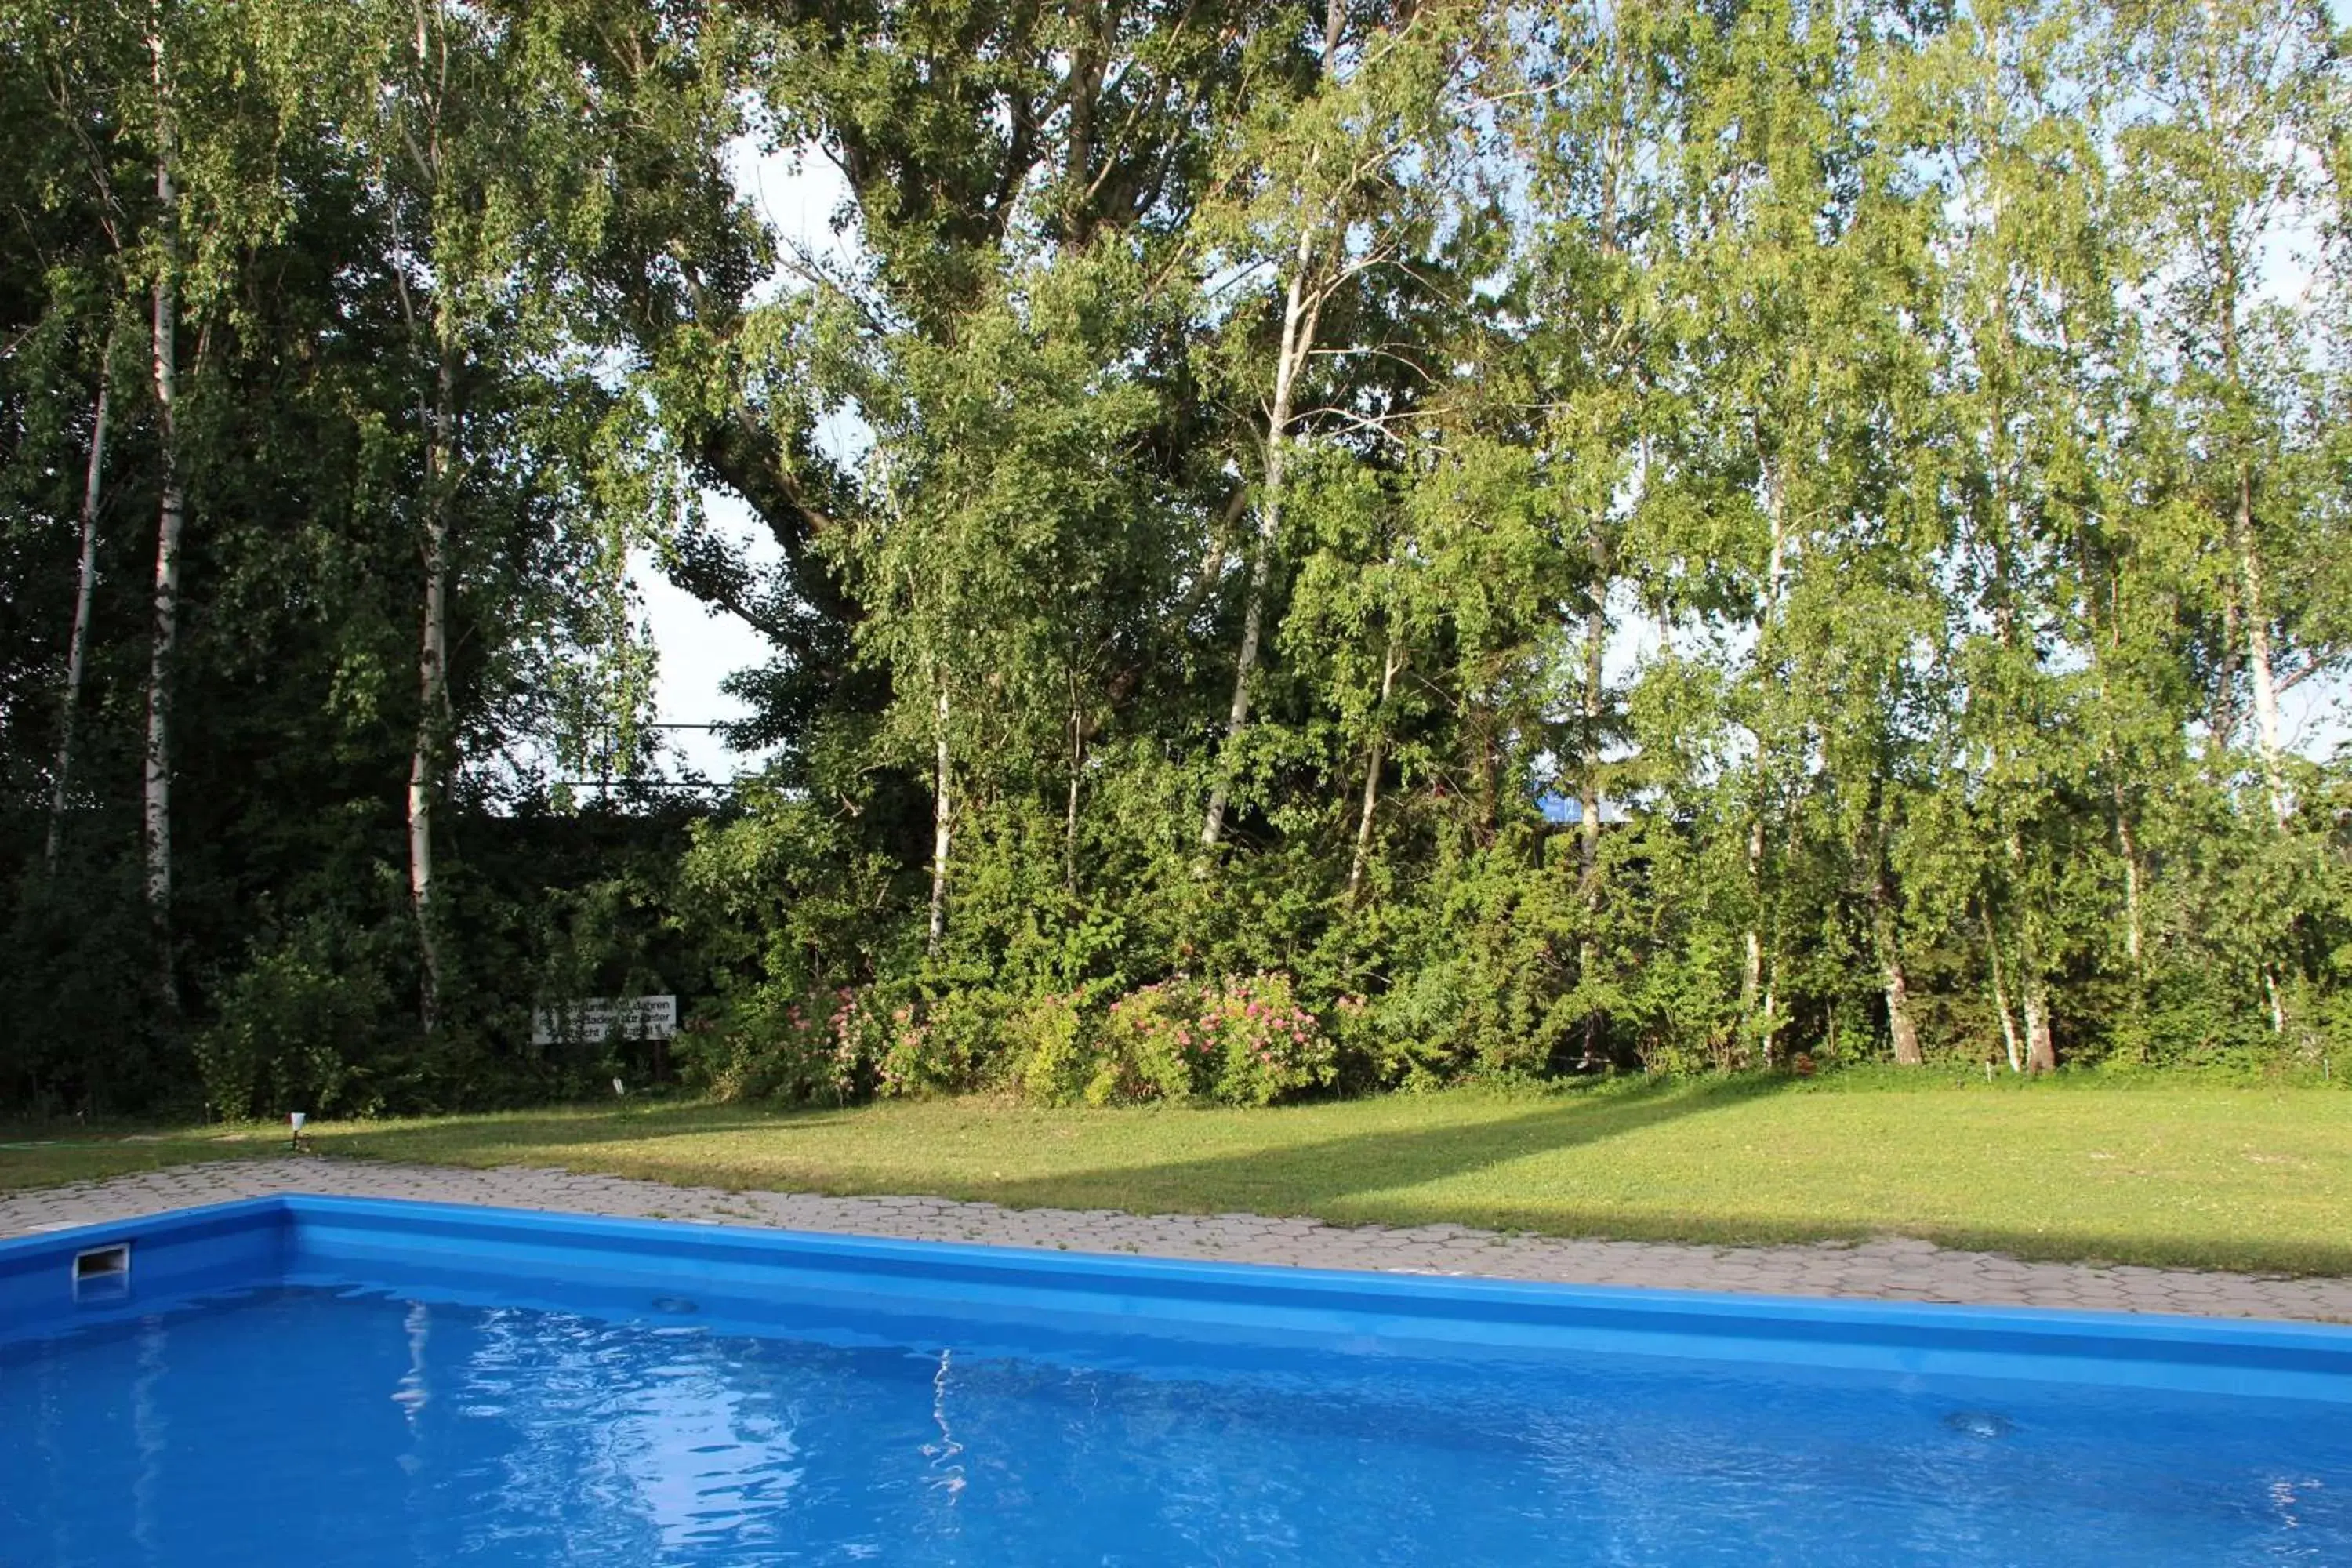 On site, Swimming Pool in Best Western Smart Hotel